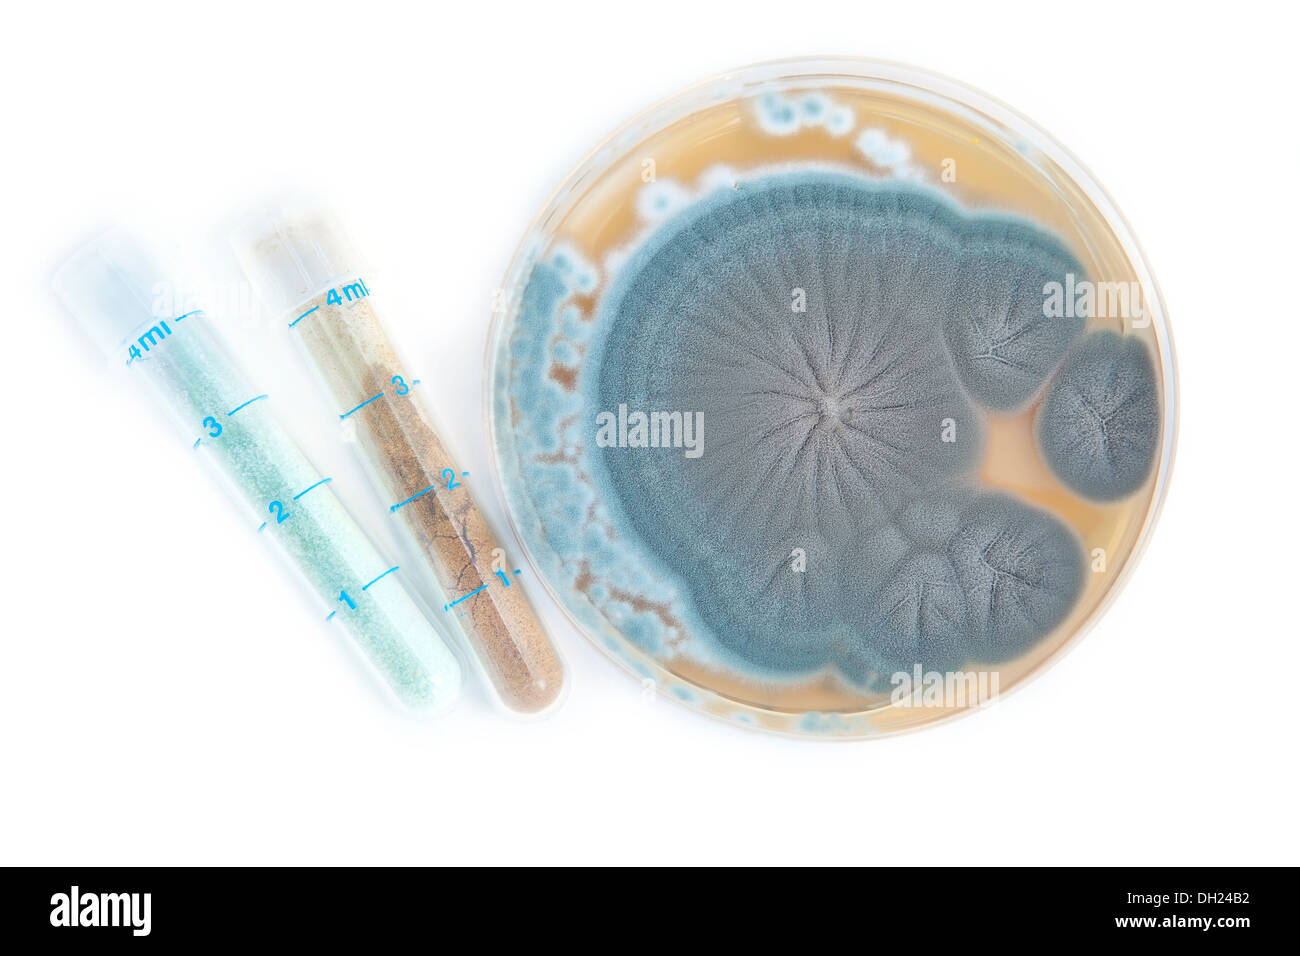 Penicillium fungi on agar plate and tubes with antibiotics on white Stock Photo